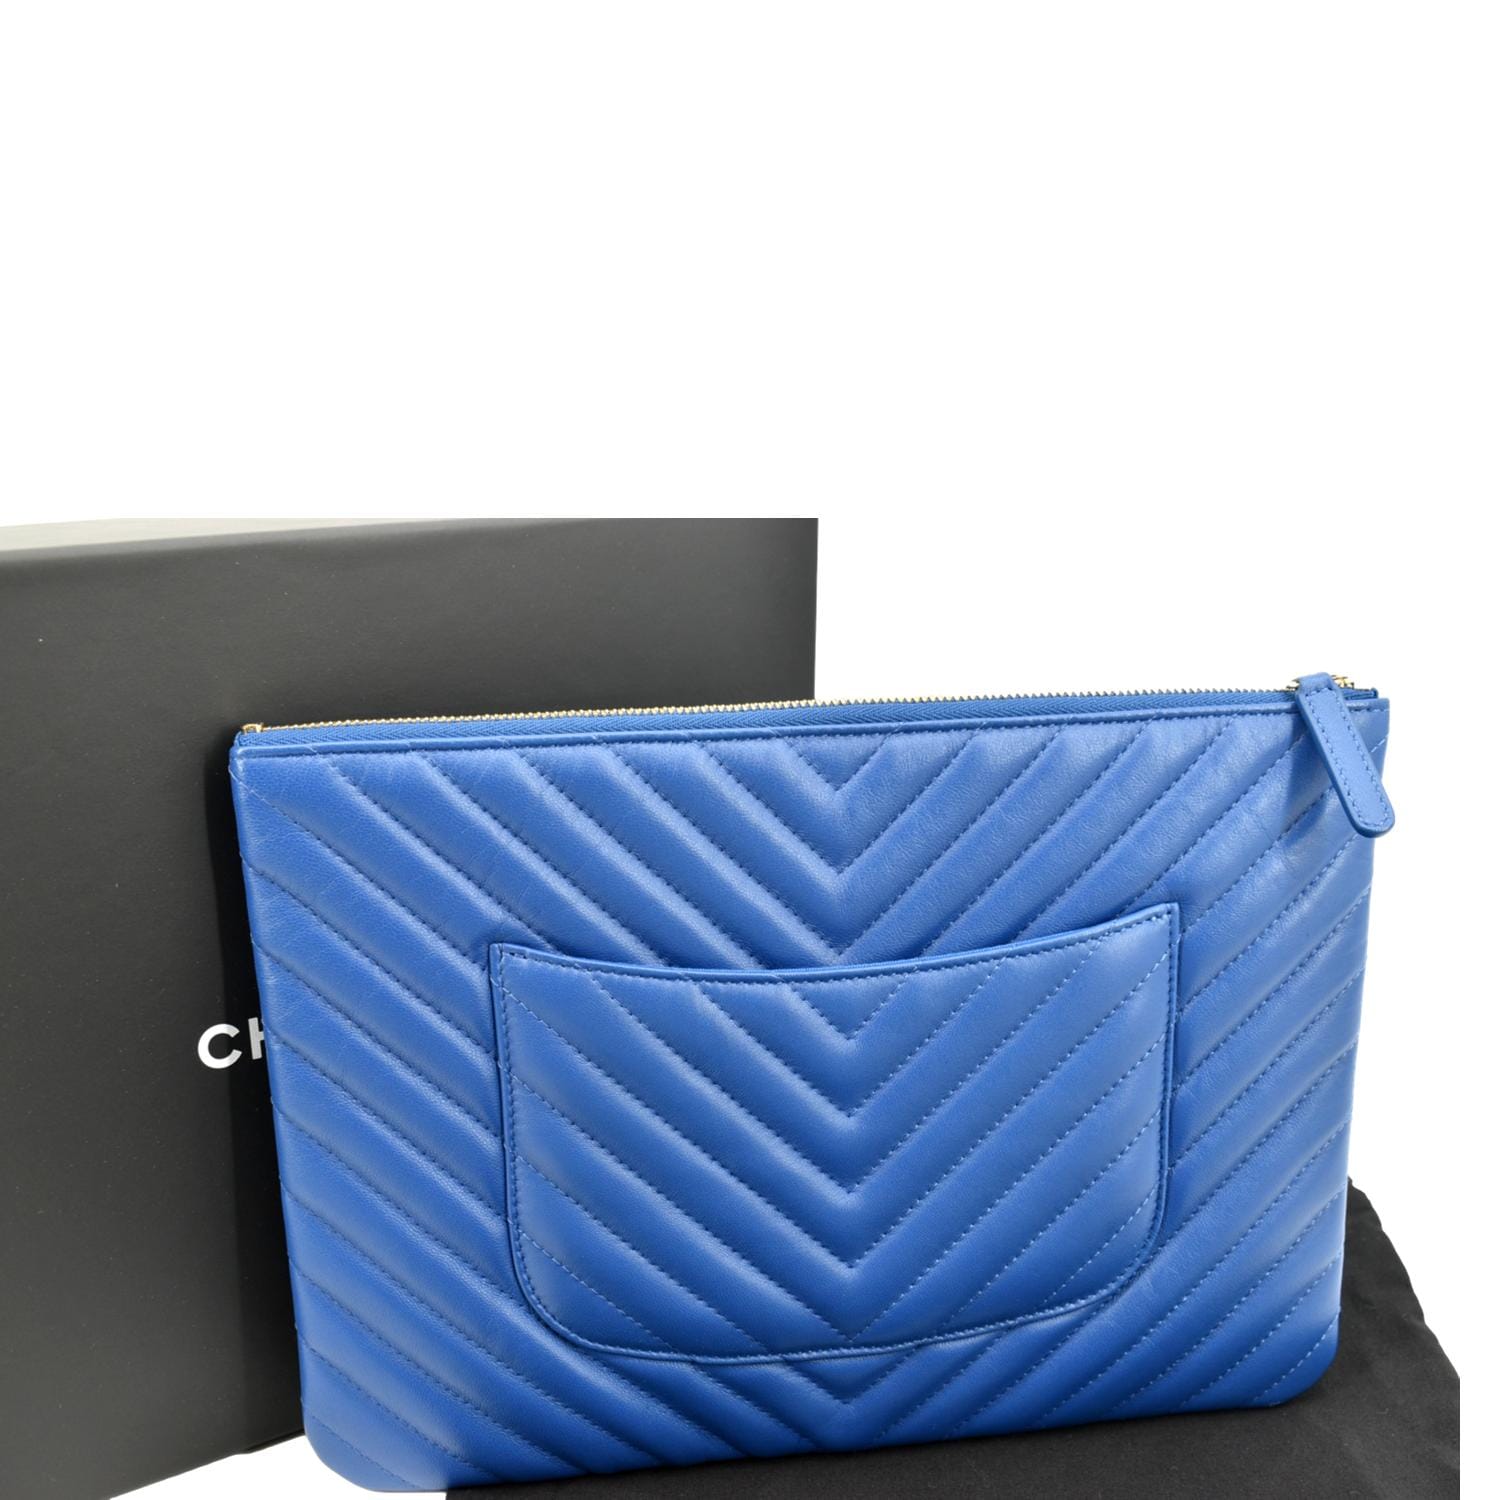 Chanel Beige Chevron Leather City Evening Box Bag